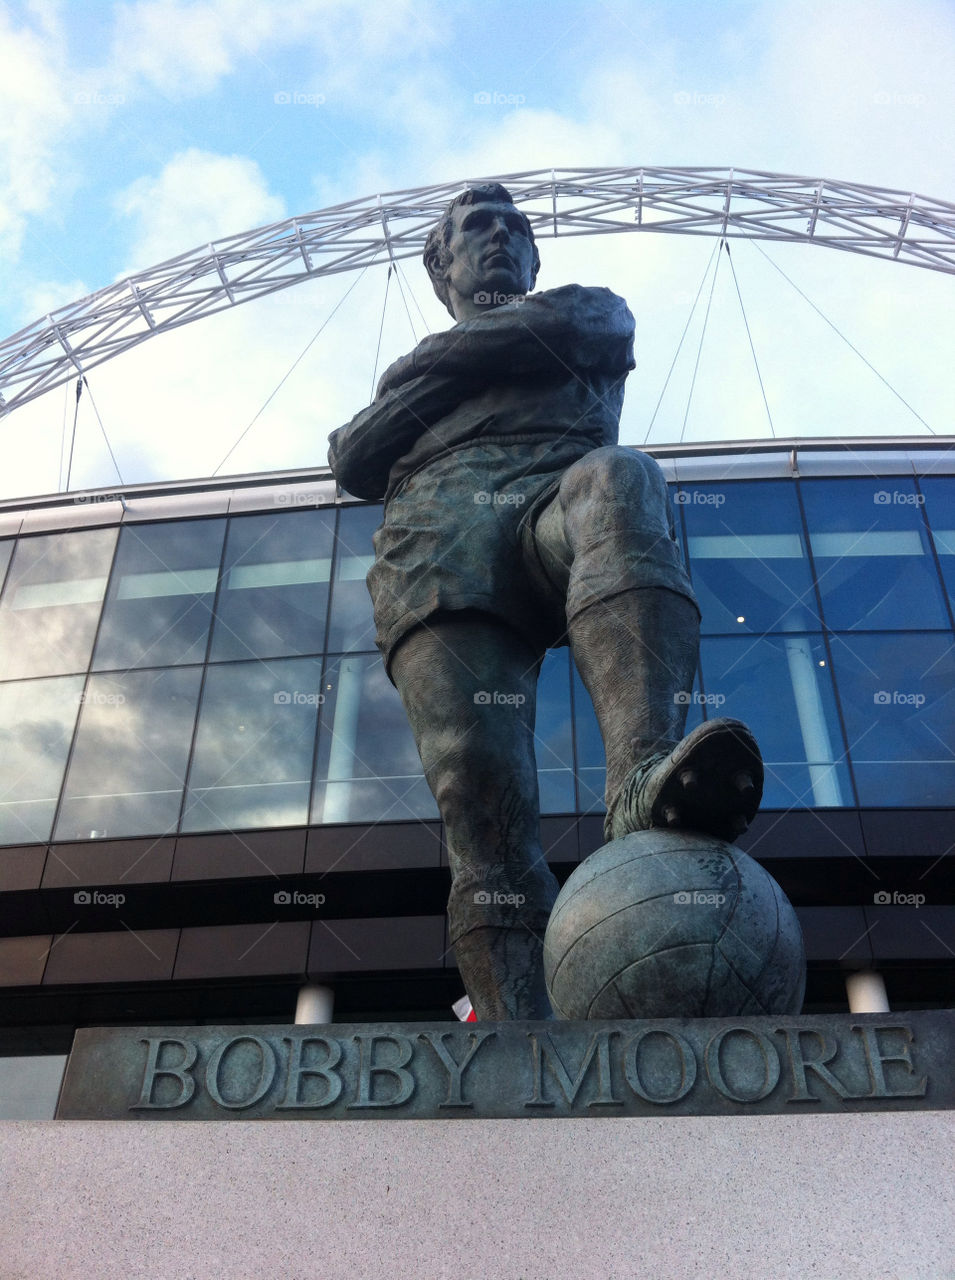 wembley stadium london bobby moore statue by craig_franklin